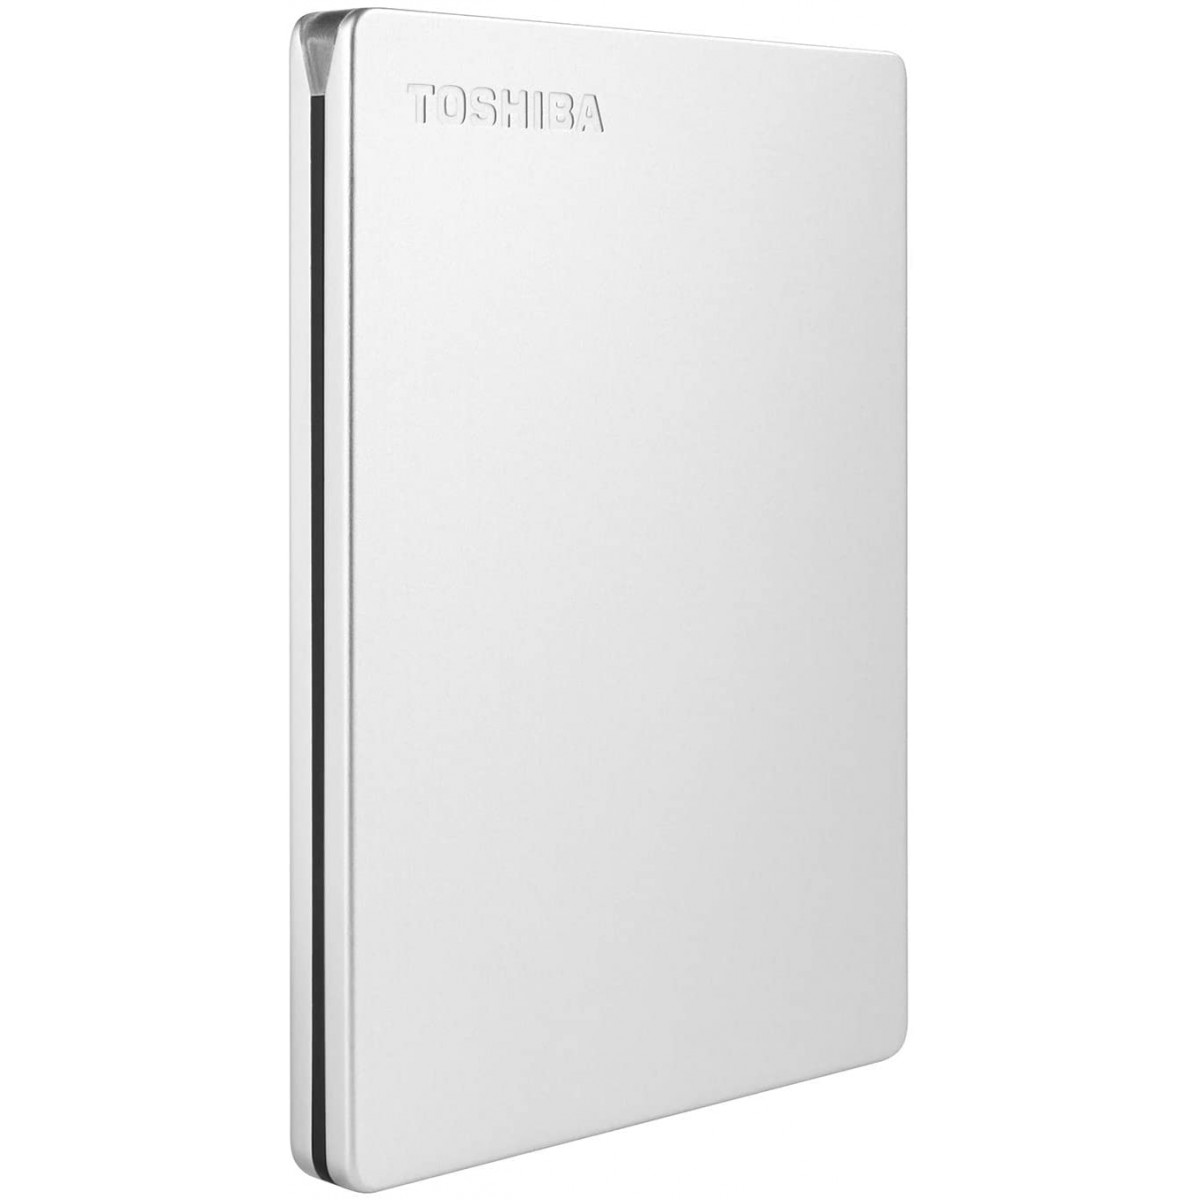 HD Externo Portátil Toshiba Canvio Slim 1TB USB 3.0, Silver, HDTD310XS3DA